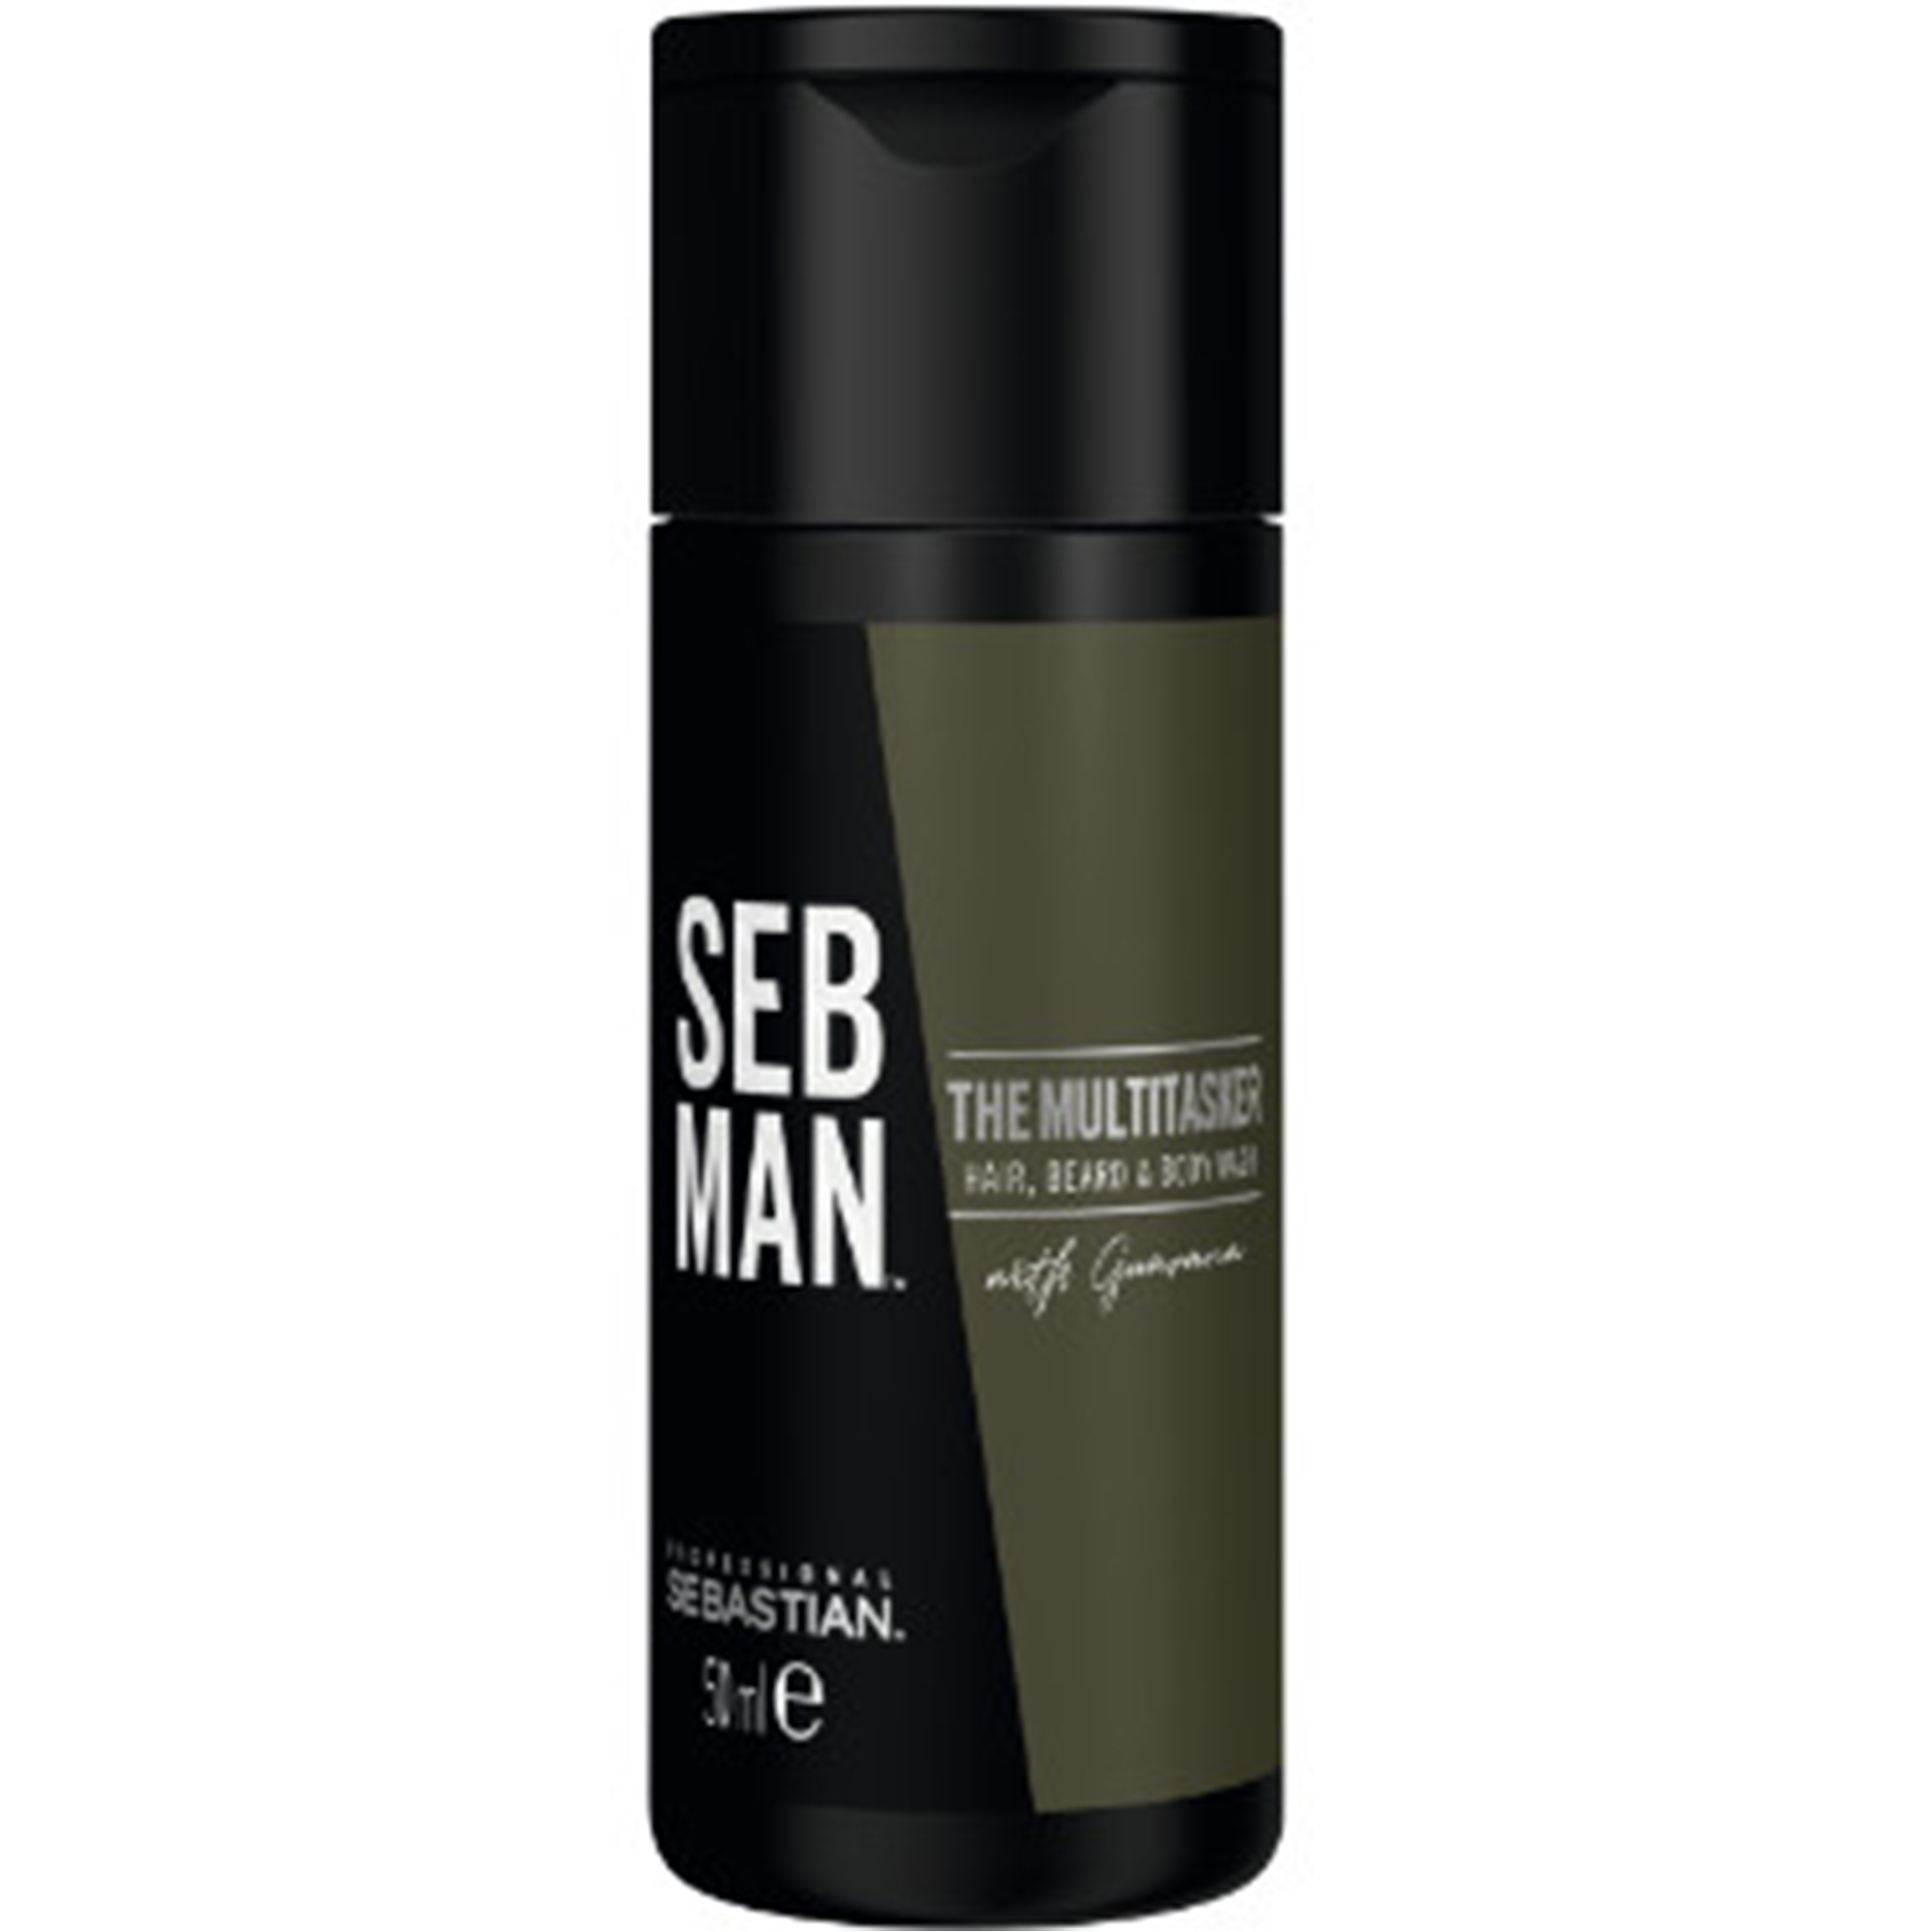 The Multi-tasker, 50 ml Sebastian Shampoo